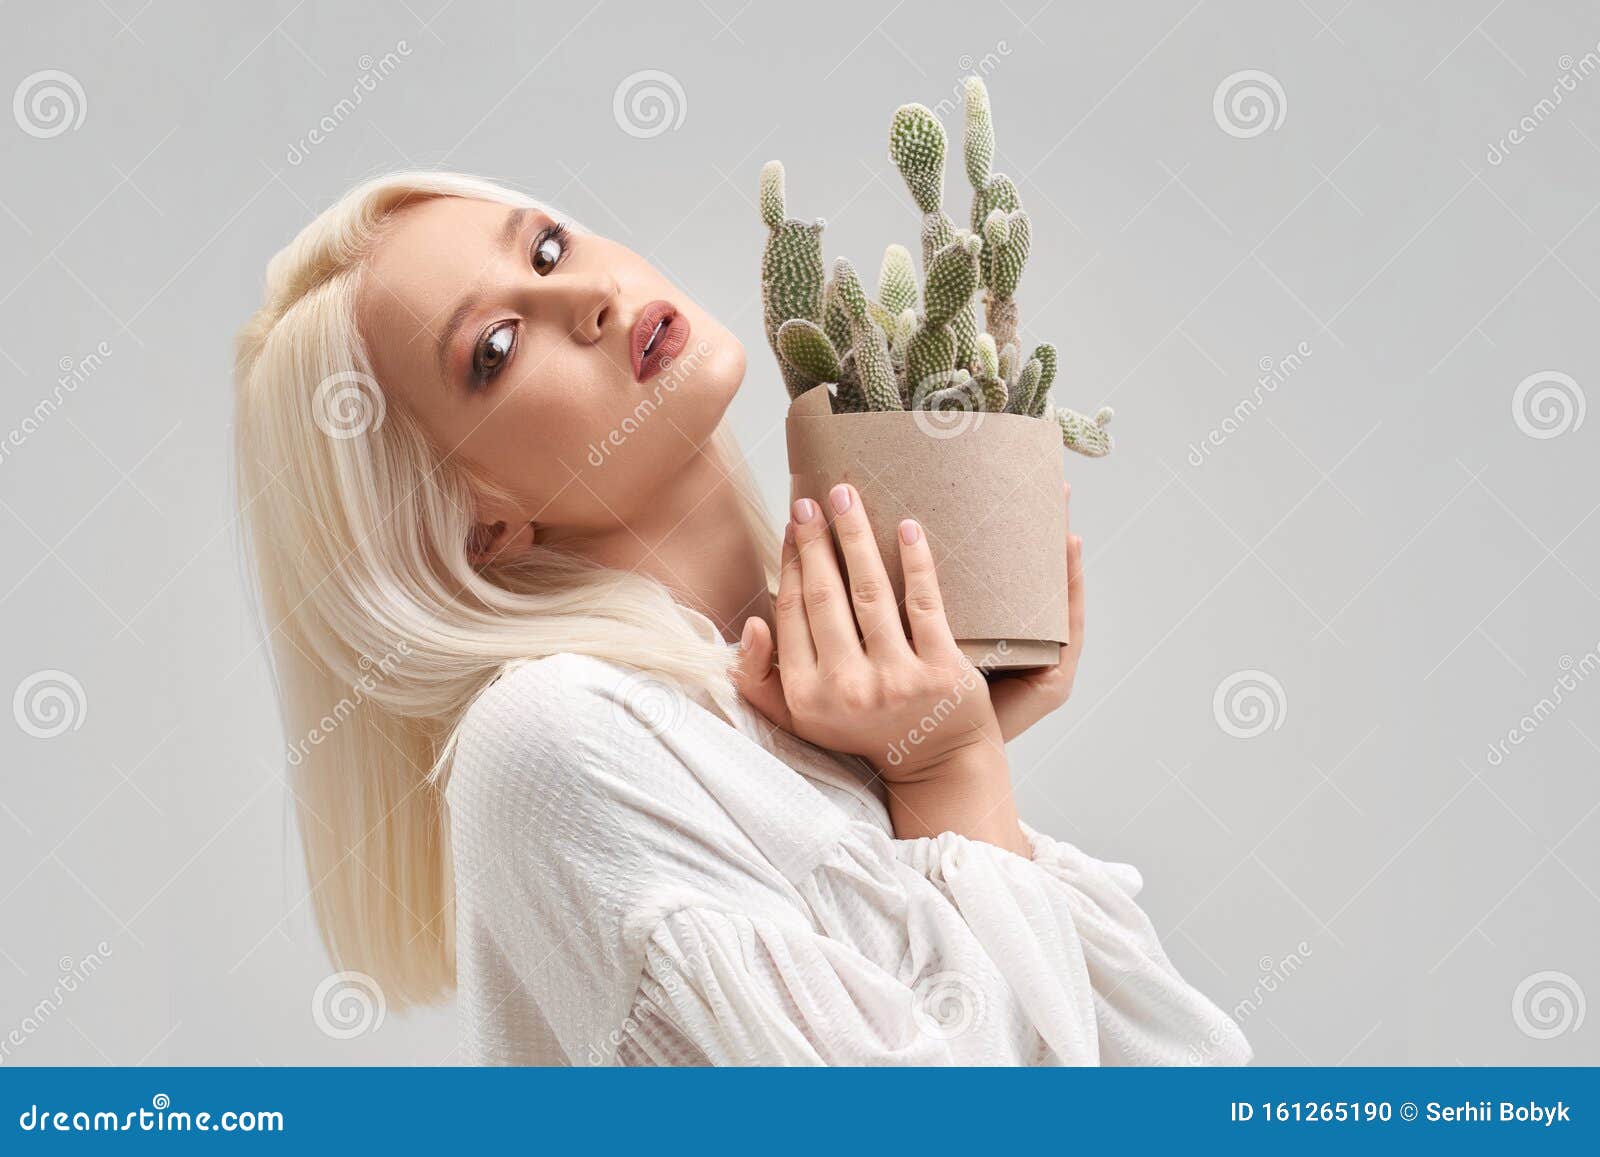 Boekhouder af hebben Isoleren Beautiful Blonde Girl with Make Up Holding Pot with Cactus Stock Photo -  Image of posing, pattern: 161265190